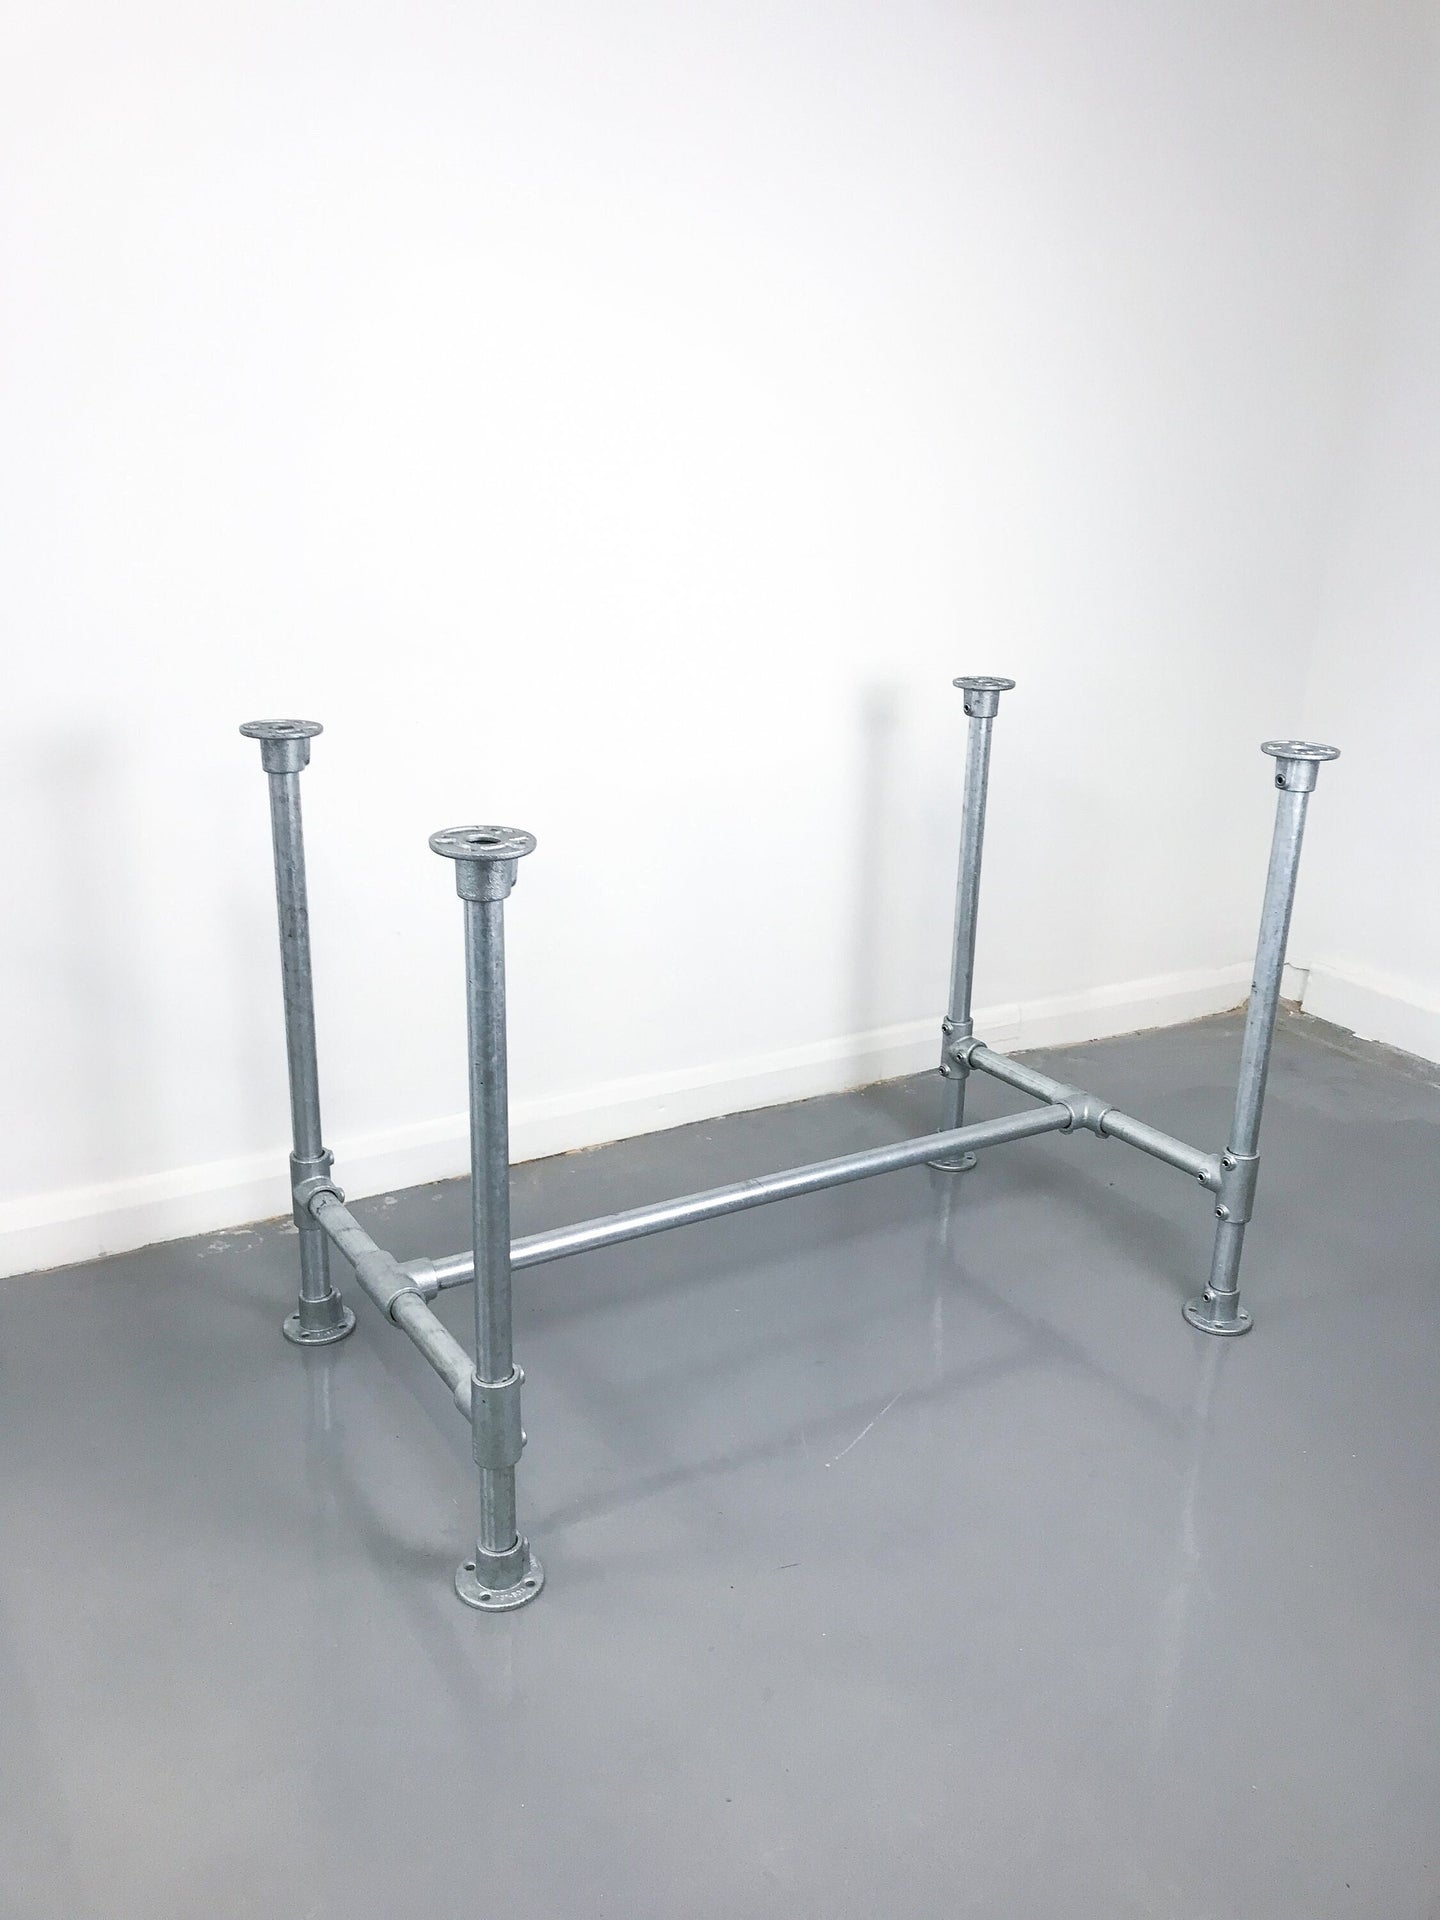 Scaffolding pipe table legs